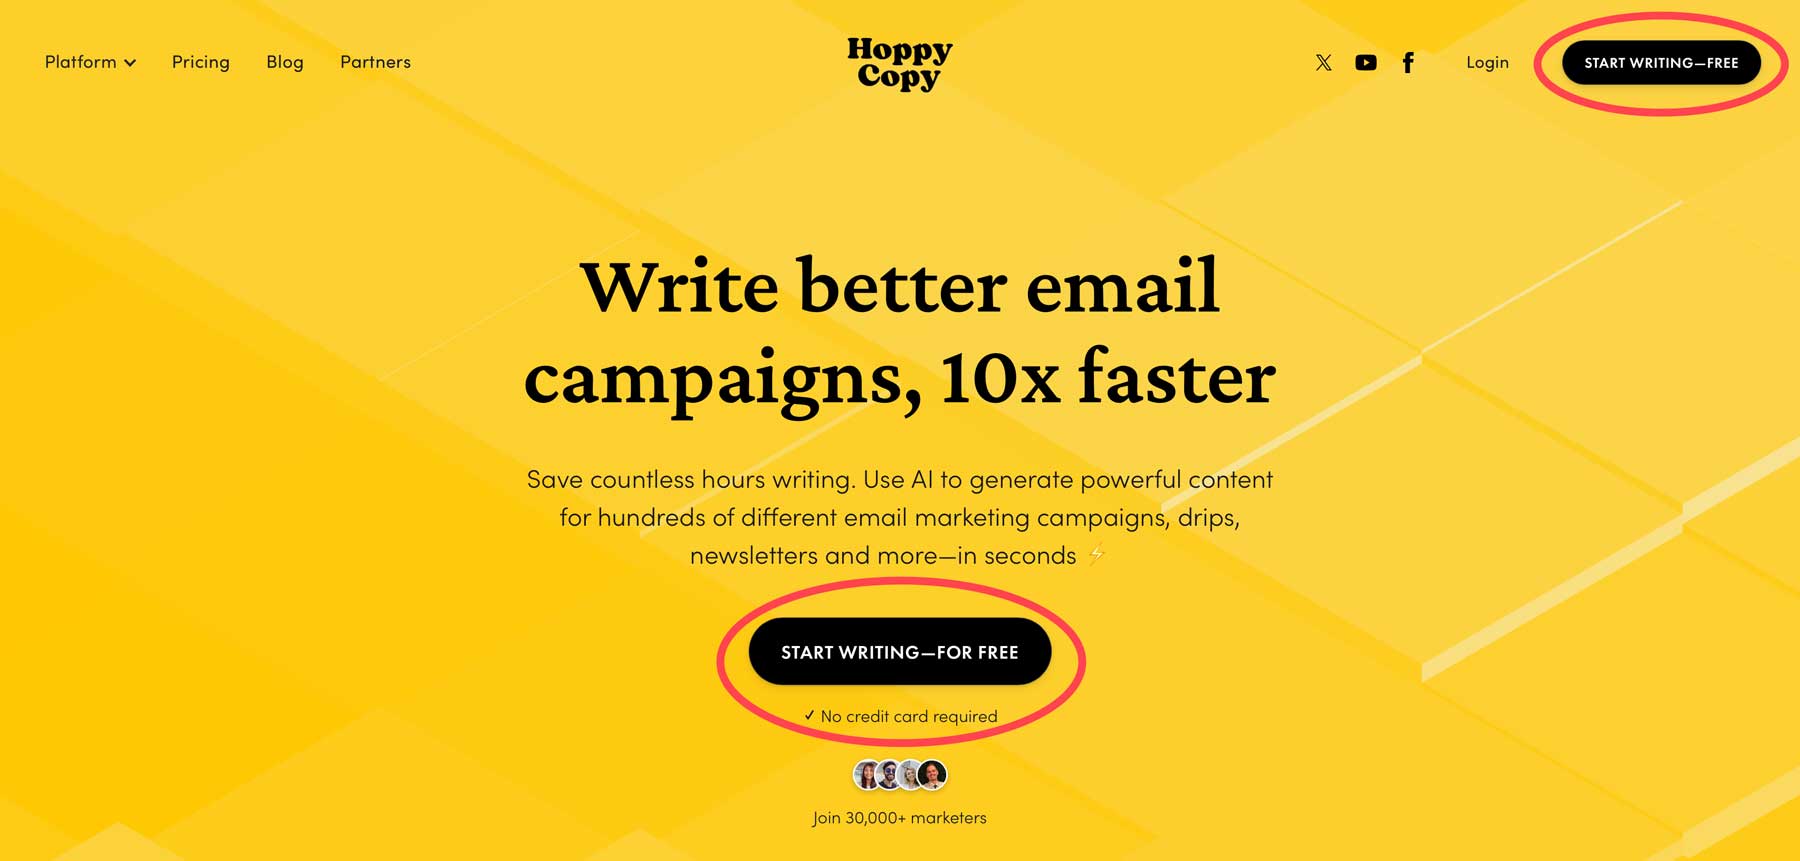 Start writing with Hoppy Copy